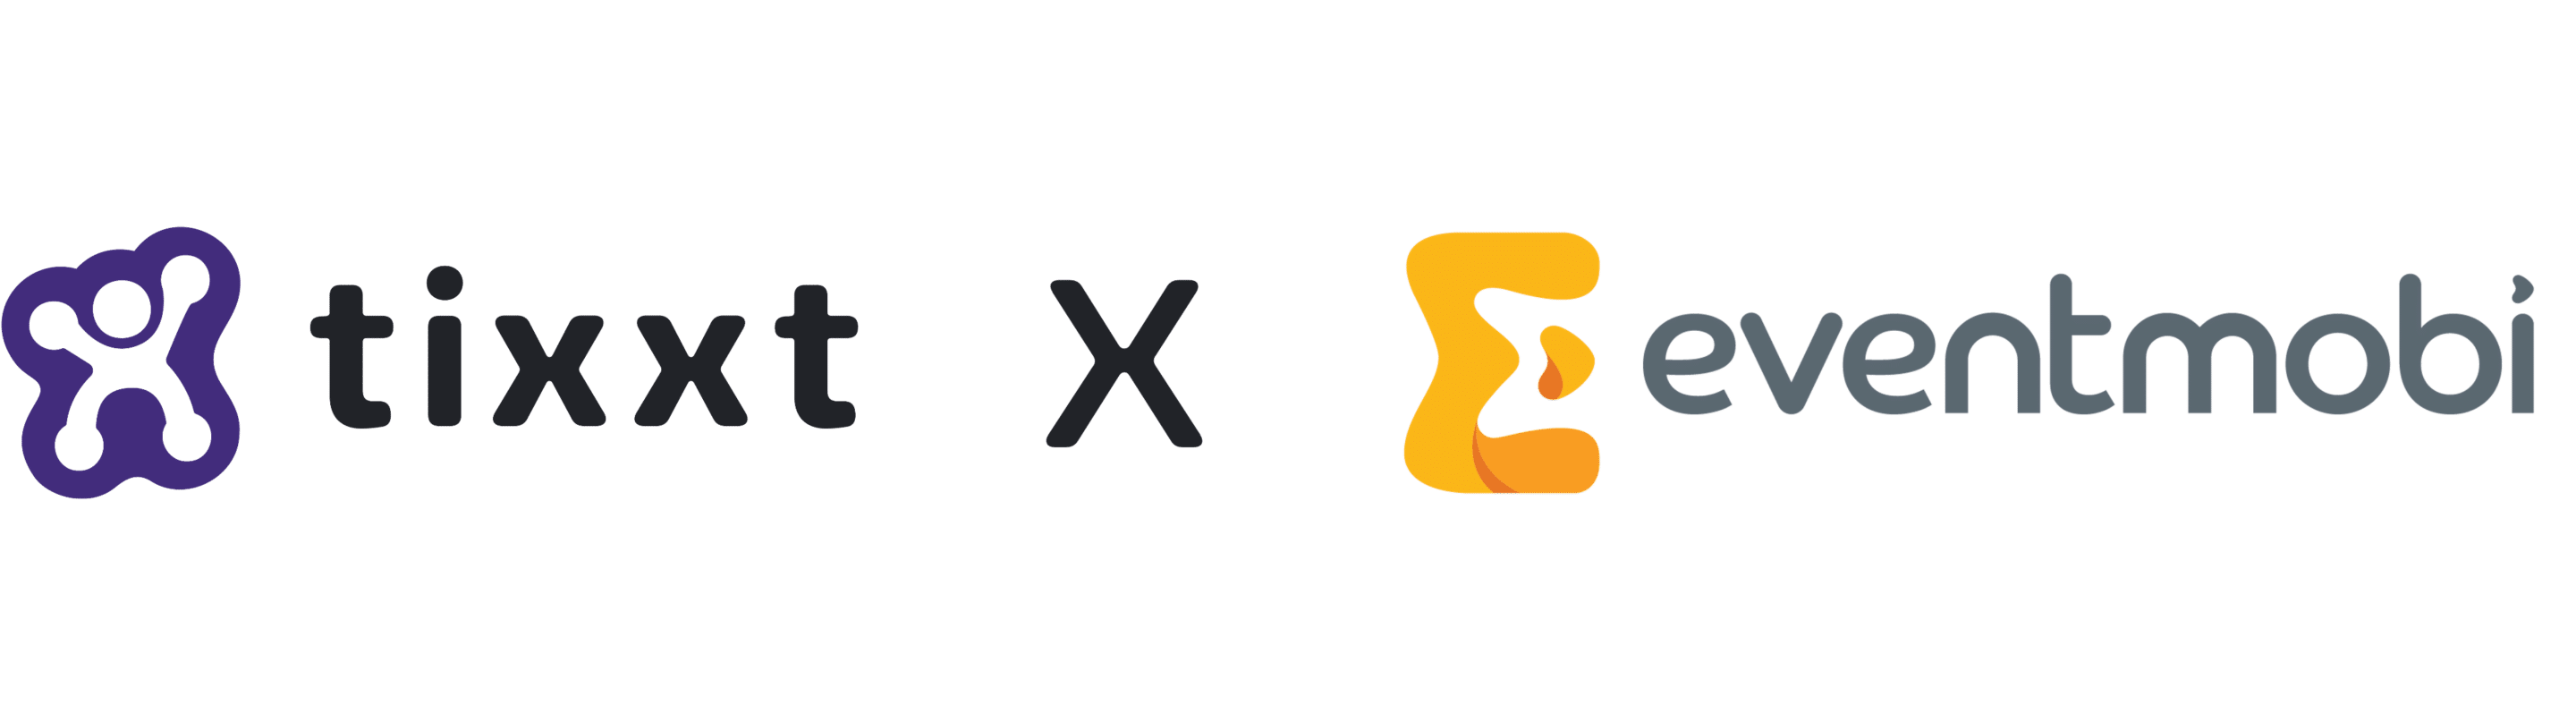 Tixxt X Eventmobi